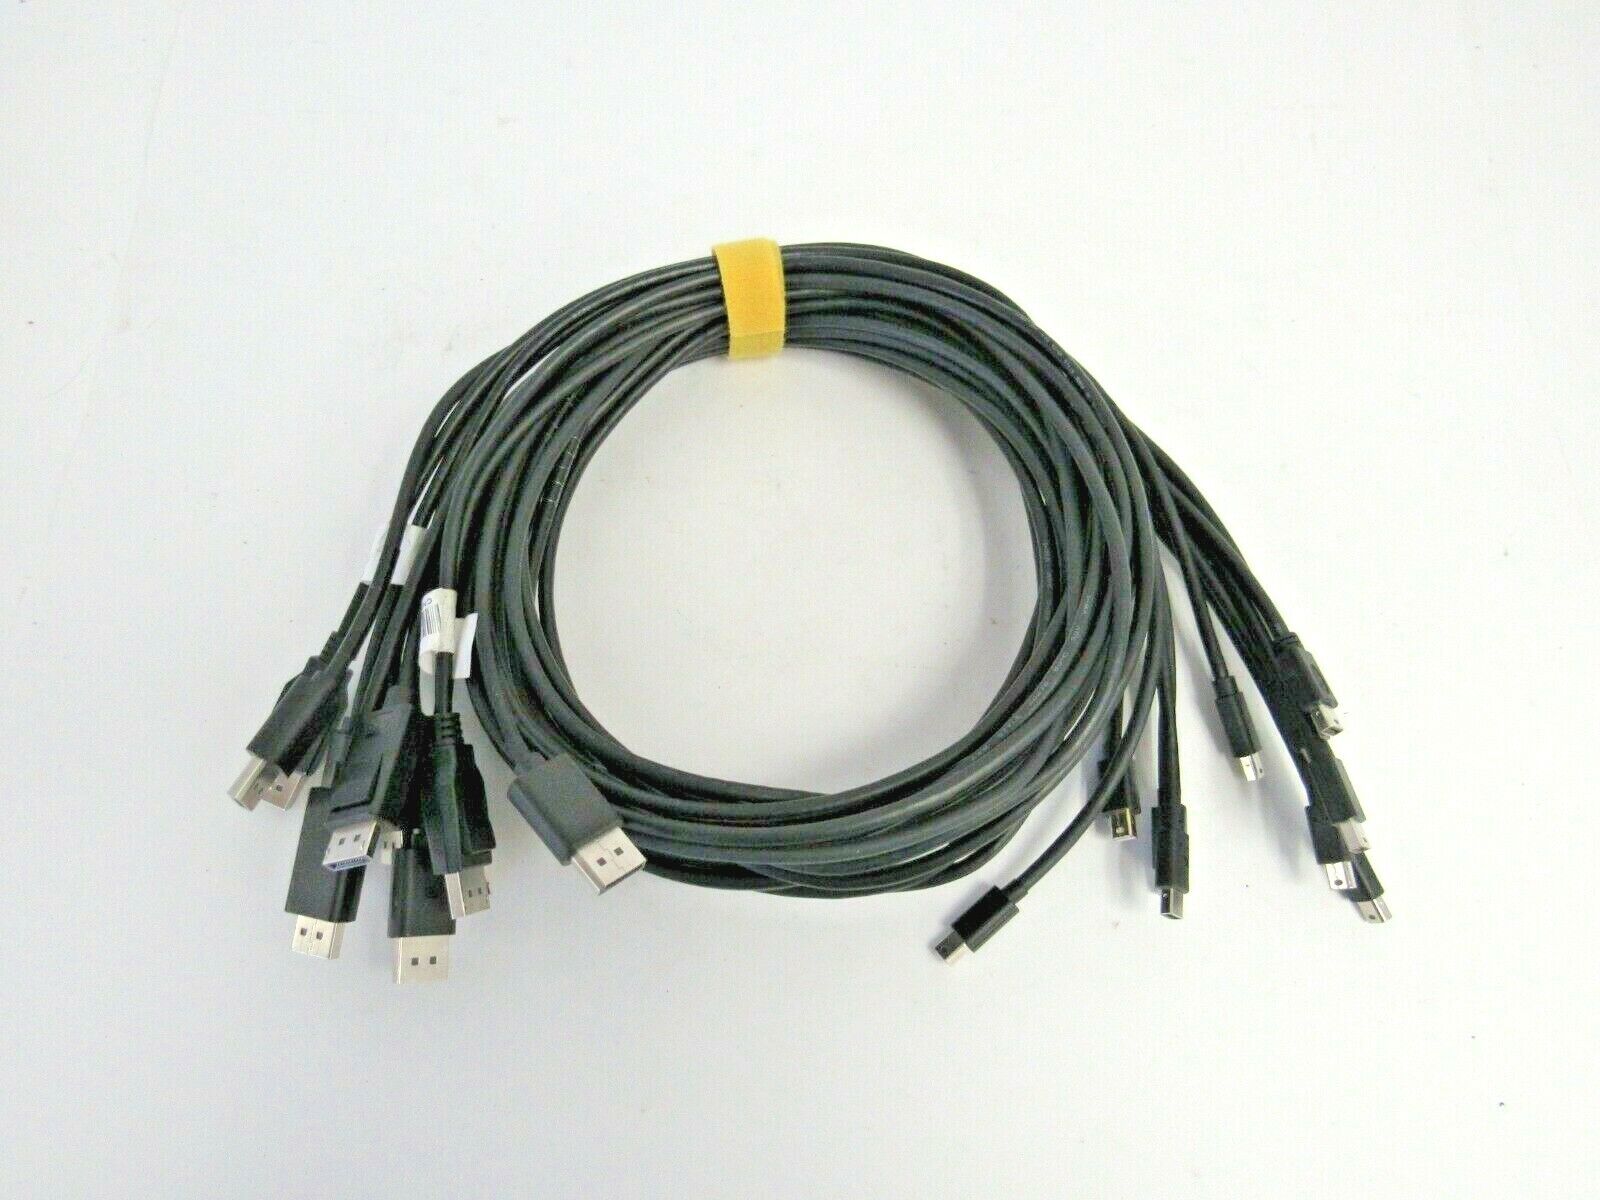 Lot of 10 6ft mini DisplayPort to DisplayPort Cable 63-5